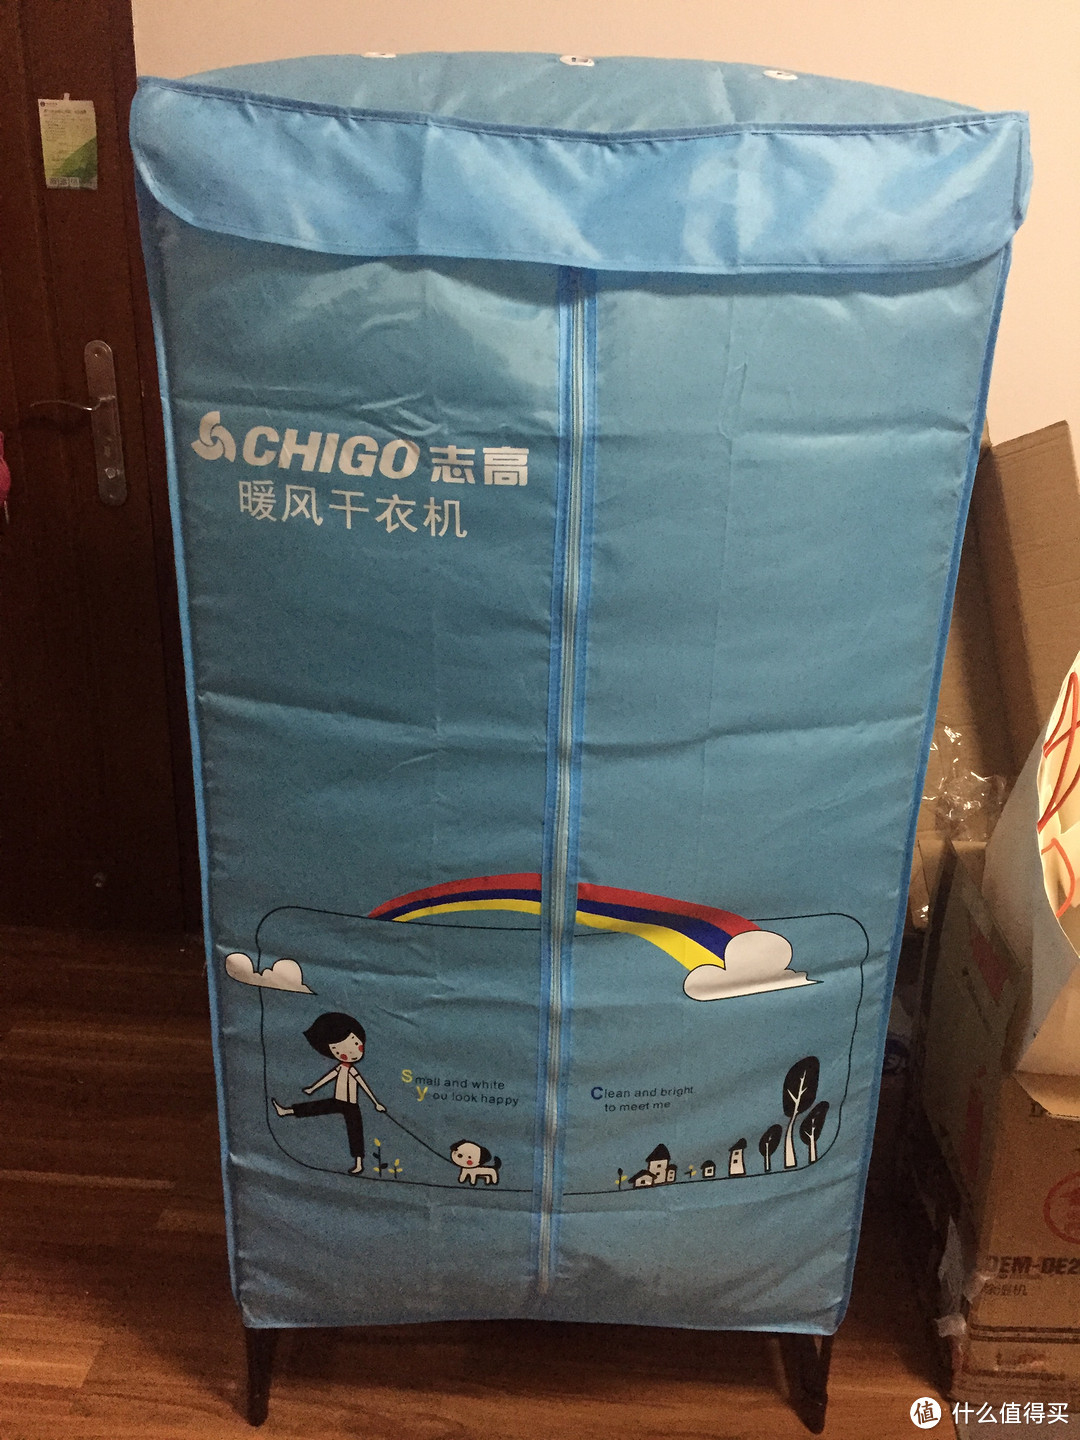 CHIGO 志高 ZG09D-01 干衣机 开箱晒单